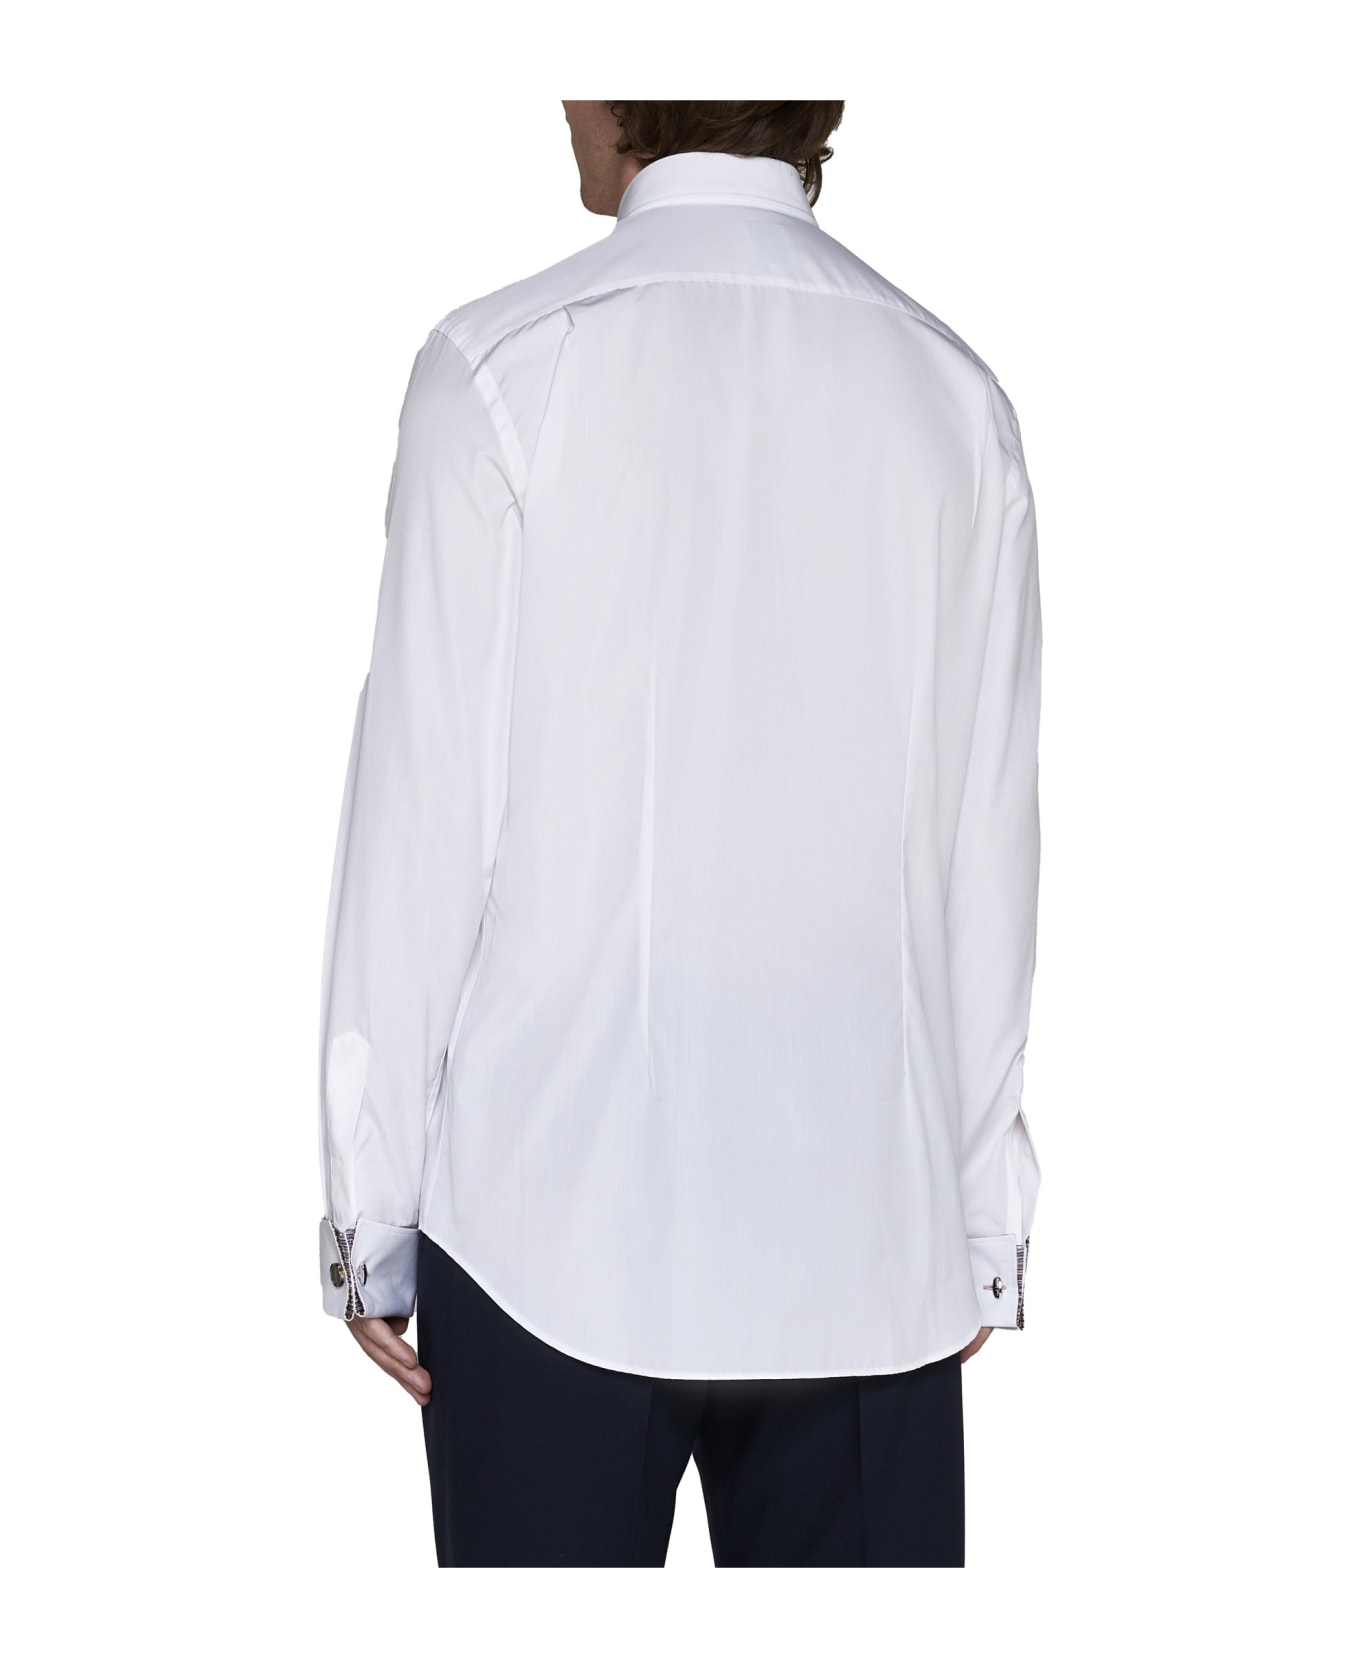 Paul Smith Shirt - White シャツ